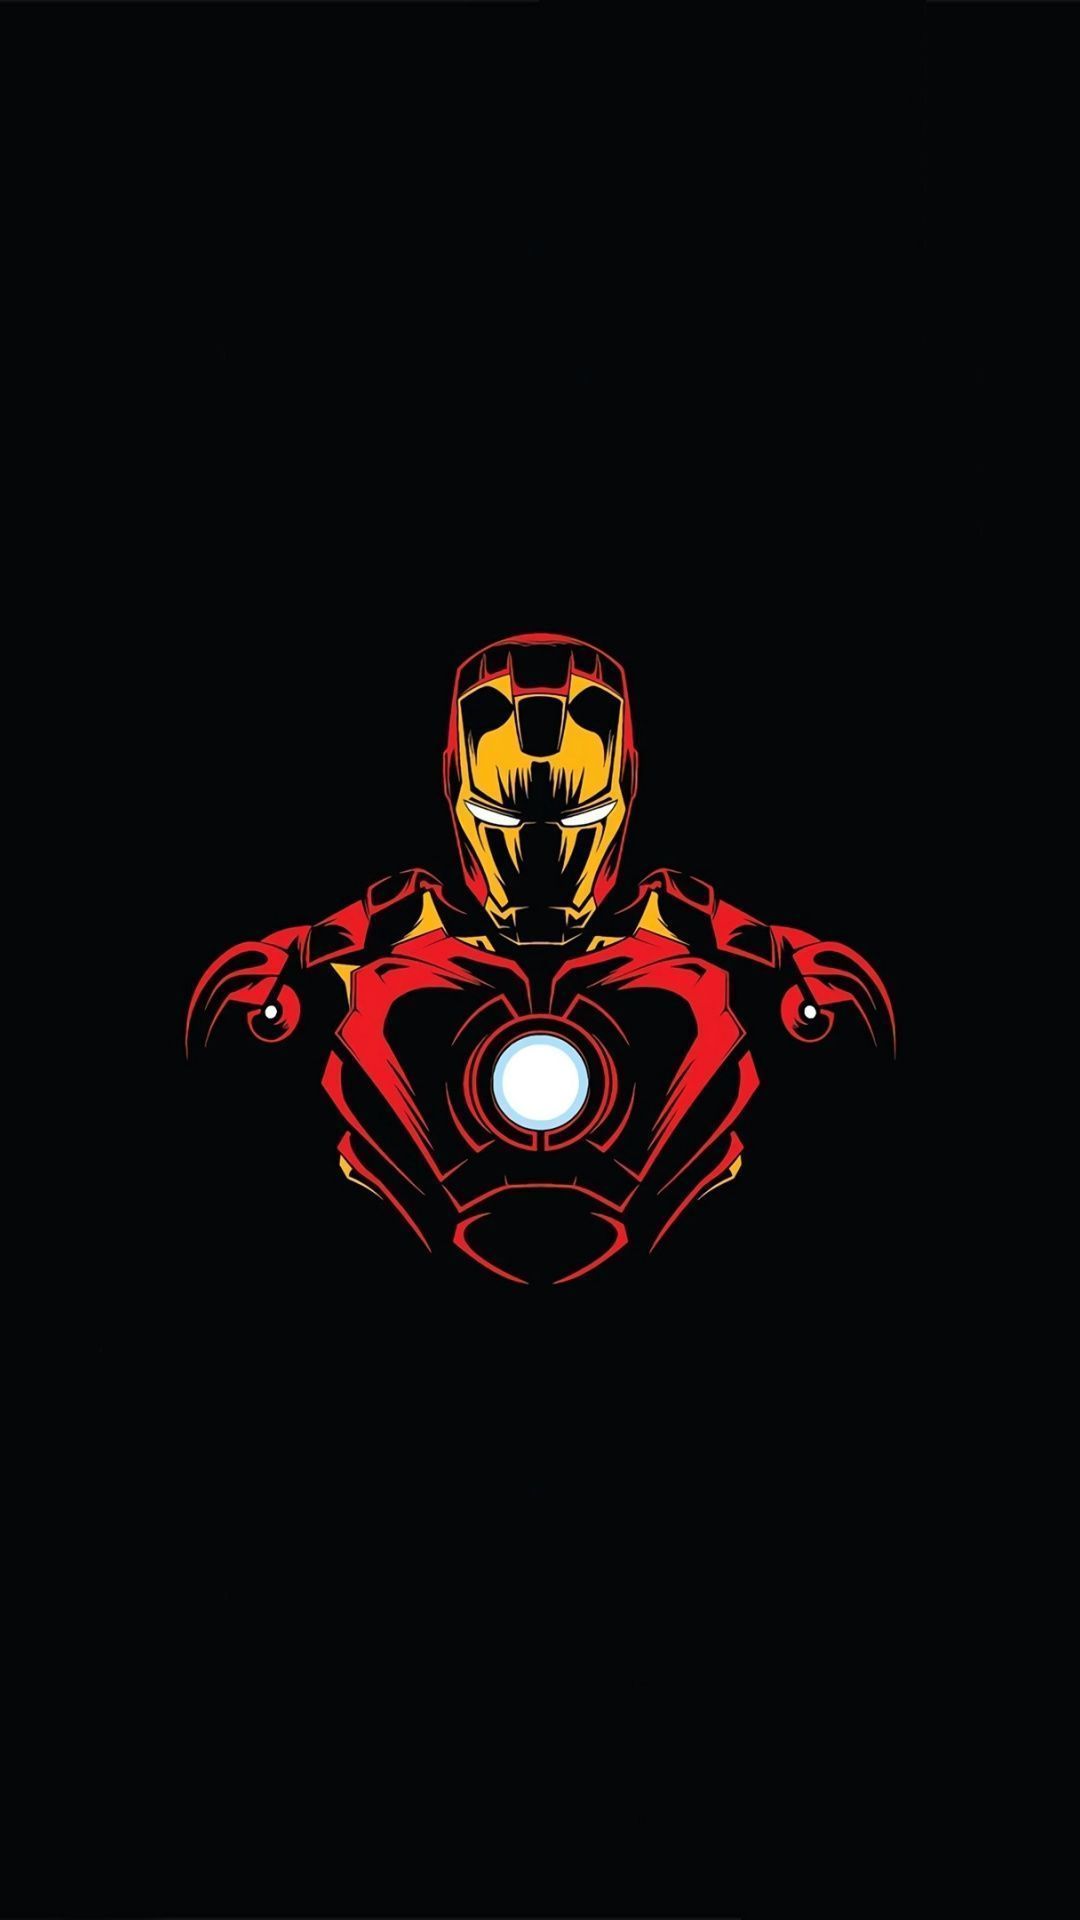 Marvel Hero Iron man minimalist wallpaper en 2020. Fondo de pantalla de iron man, Fondo de pantalla de avengers, Arte de ironman